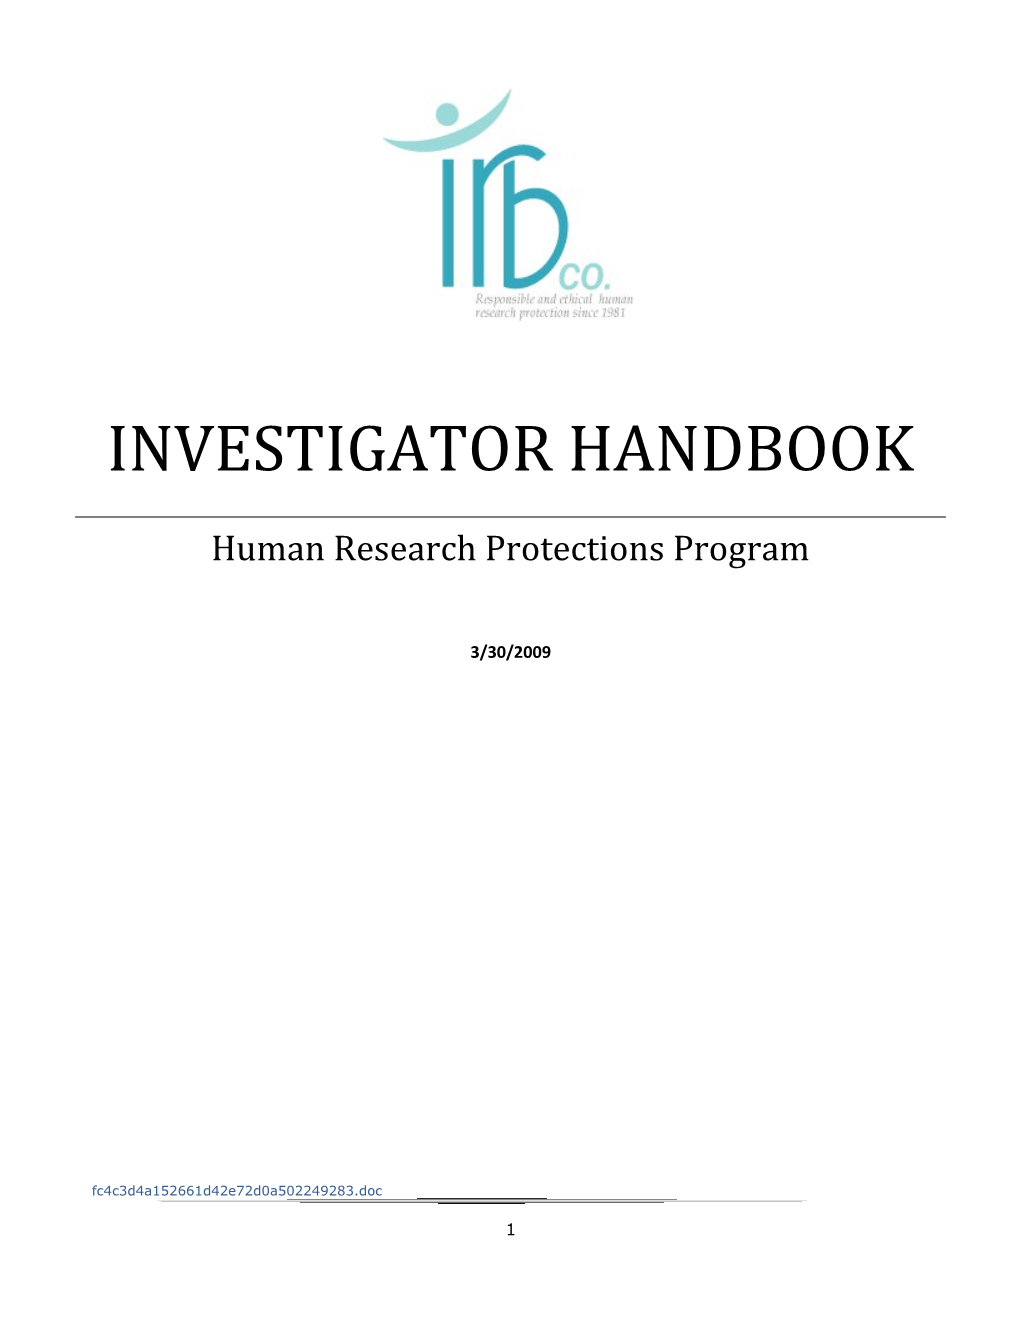 Investigator Handbook